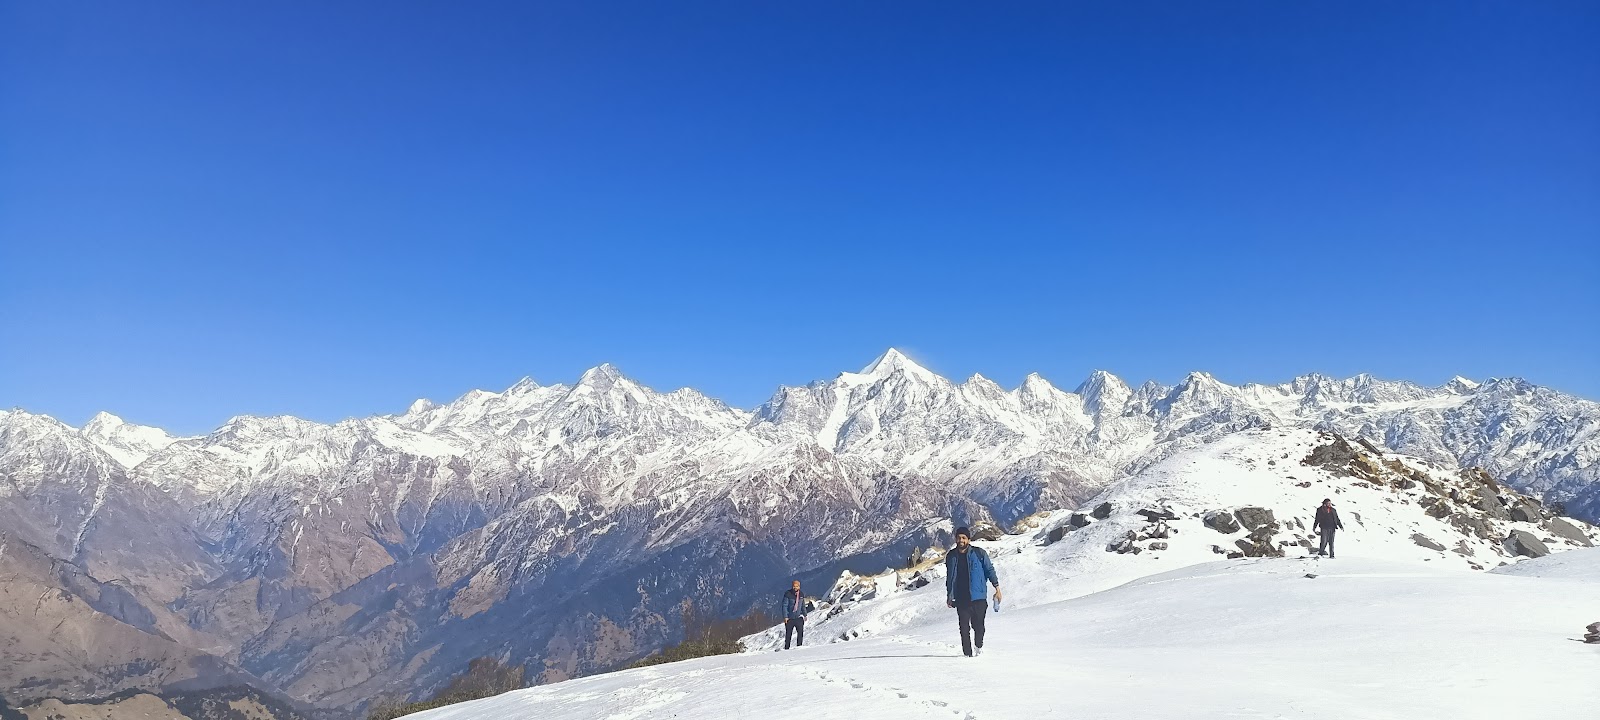 mountains of my hometown Uttarakhand